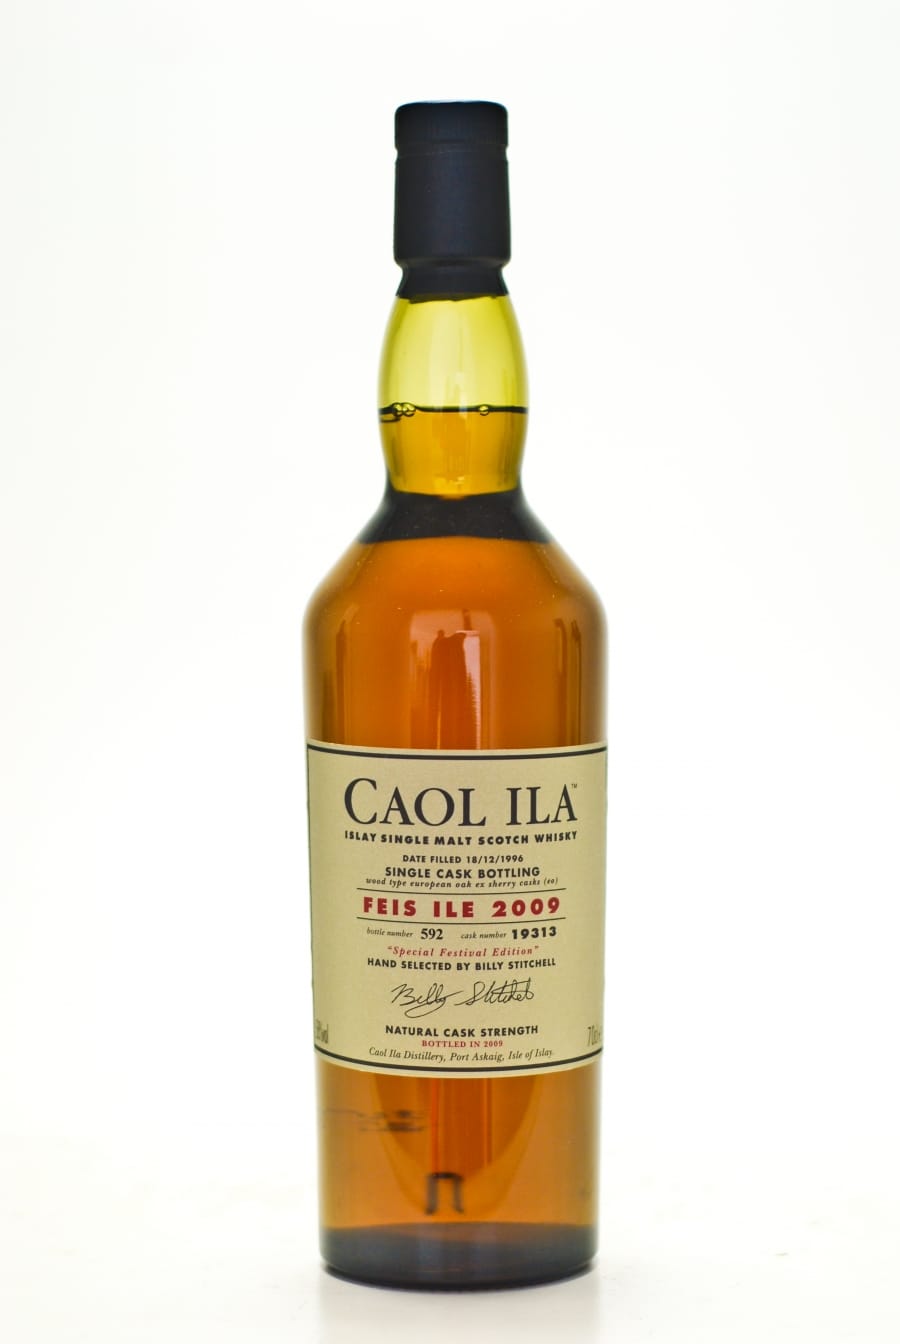 Caol Ila - Caol Ila Feis Isle 2009 12 Years Old ex sherry cask: 19313 1 Of 654 Bottles Barcode ID:5000281024783 1996